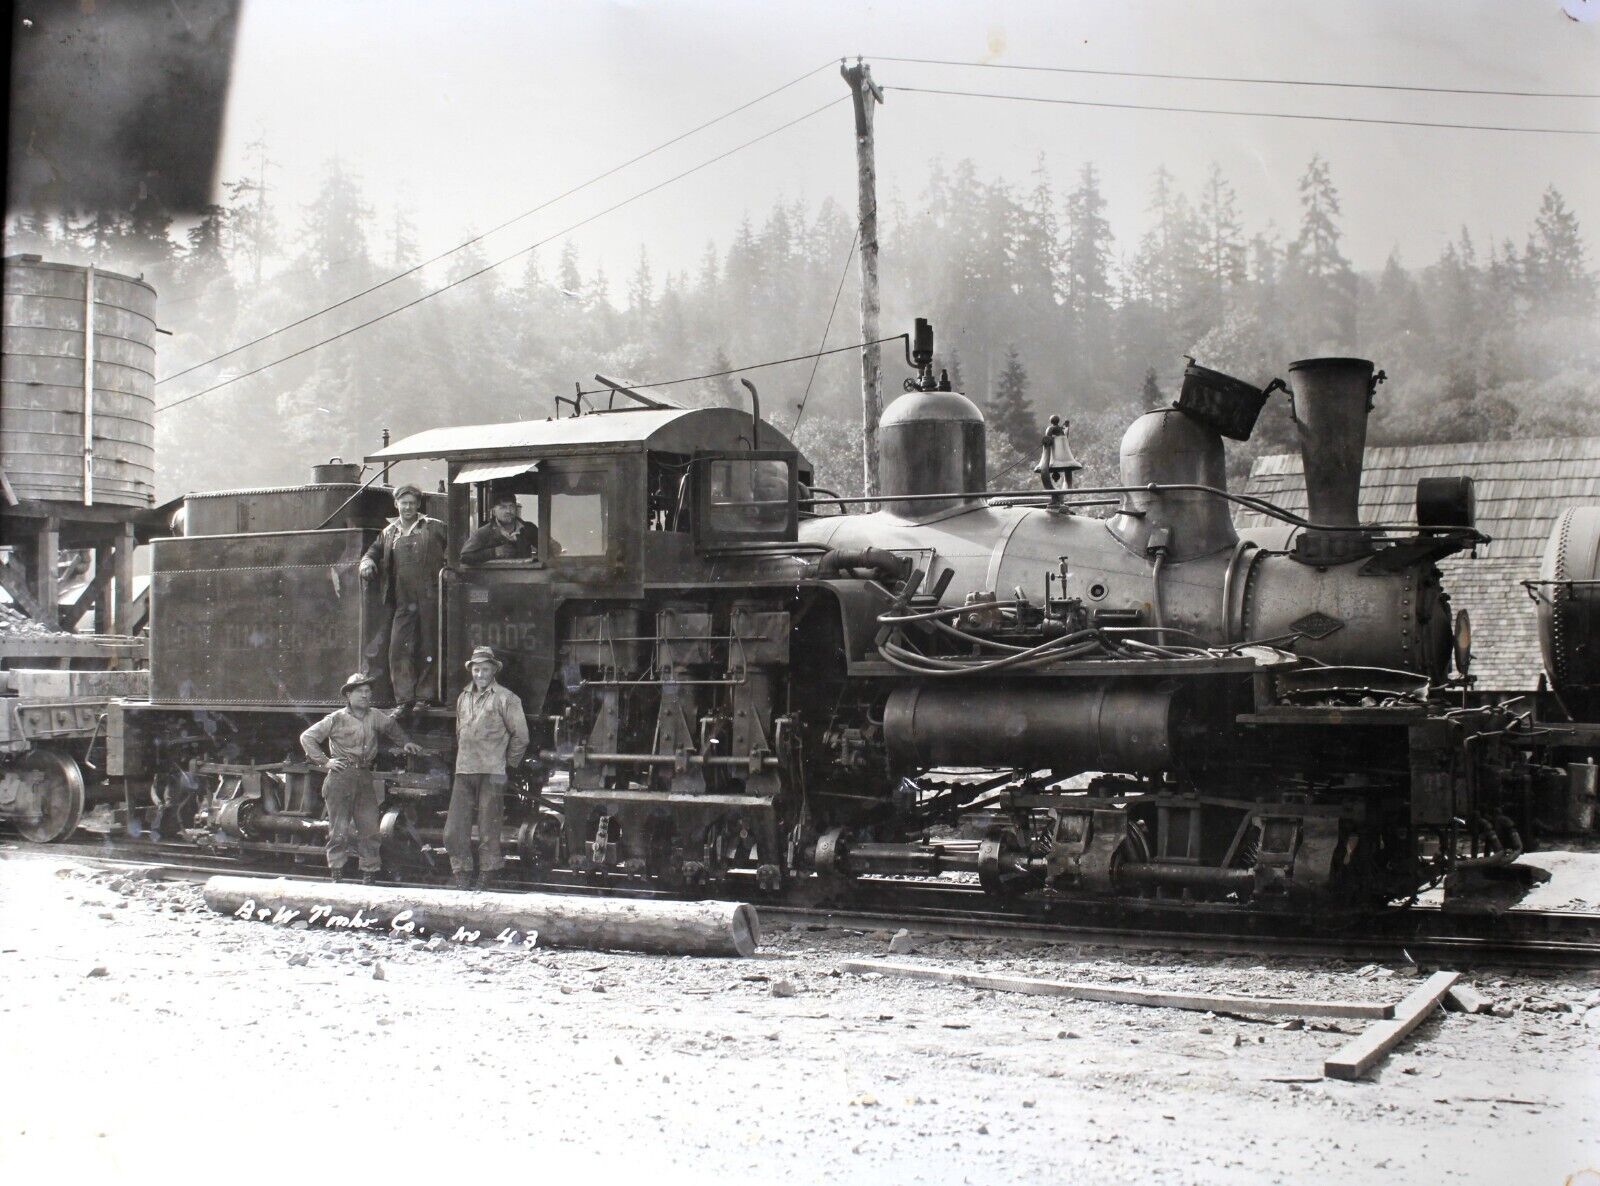 Historical Washington State Timber Railroad Photo Attributed to Darius Kinsey